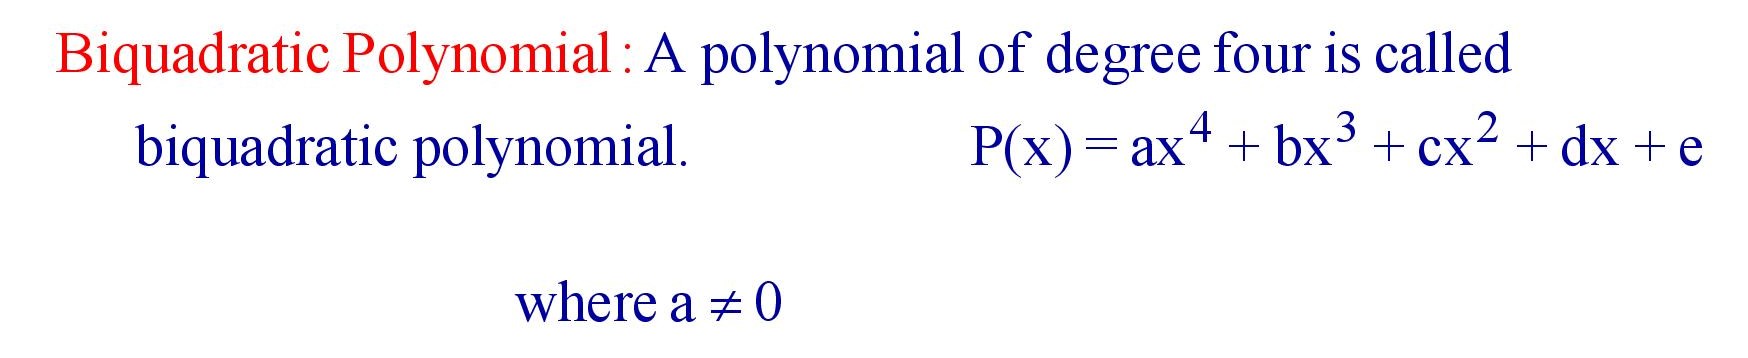 Biquadratic Polynomial Definition